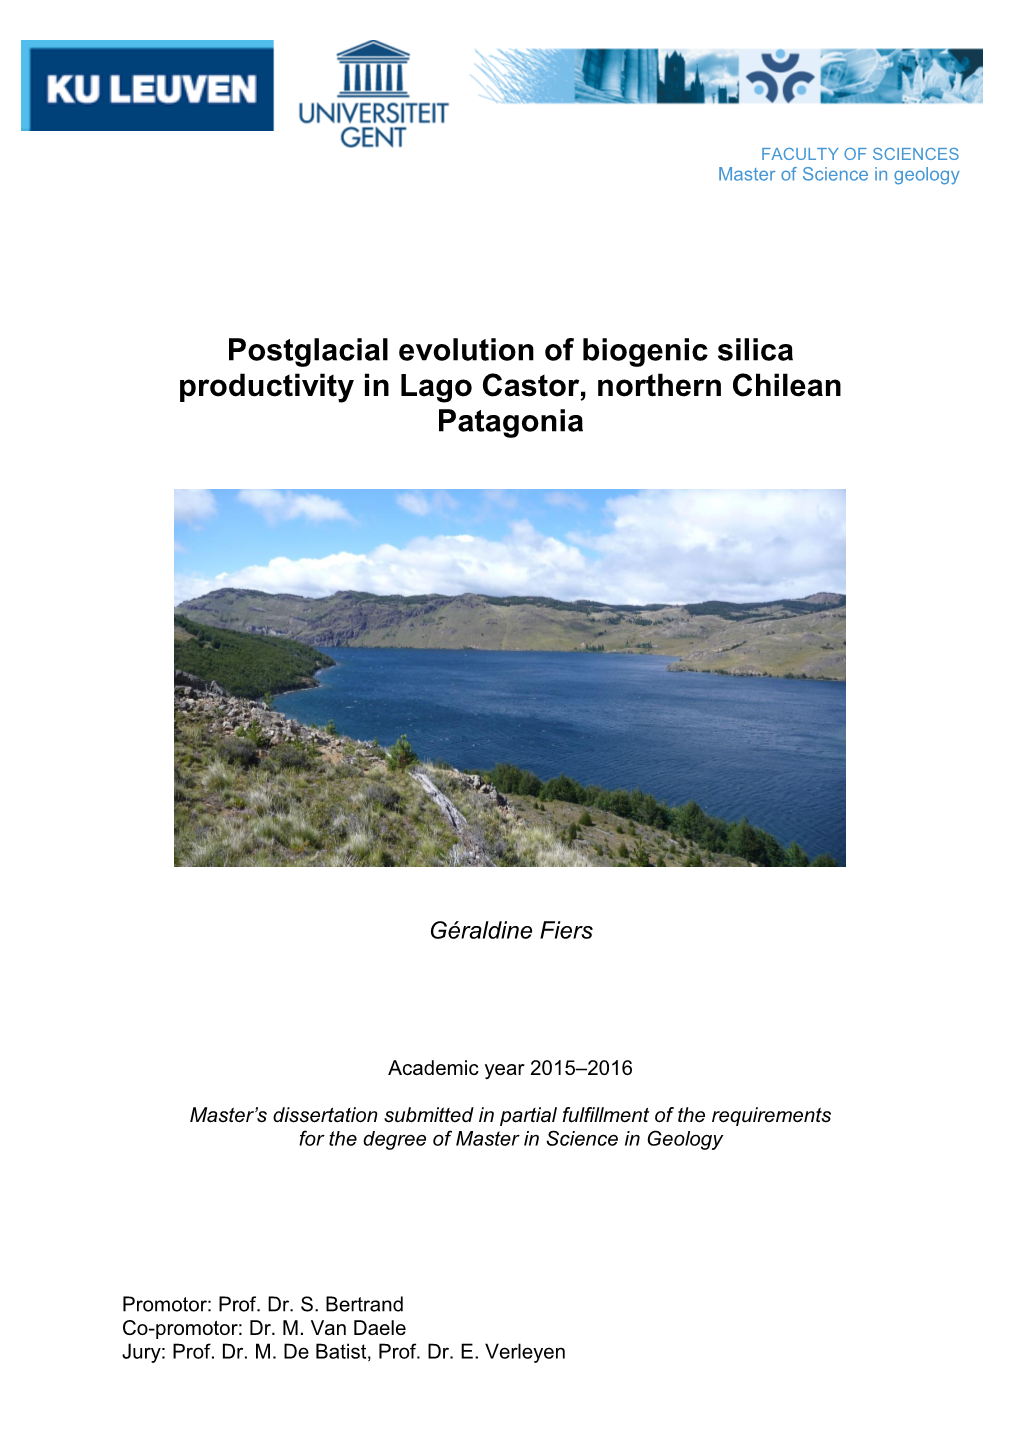 Postglacial Evolution of Biogenic Silica Productivity in Lago Castor, Northern Chilean Patagonia